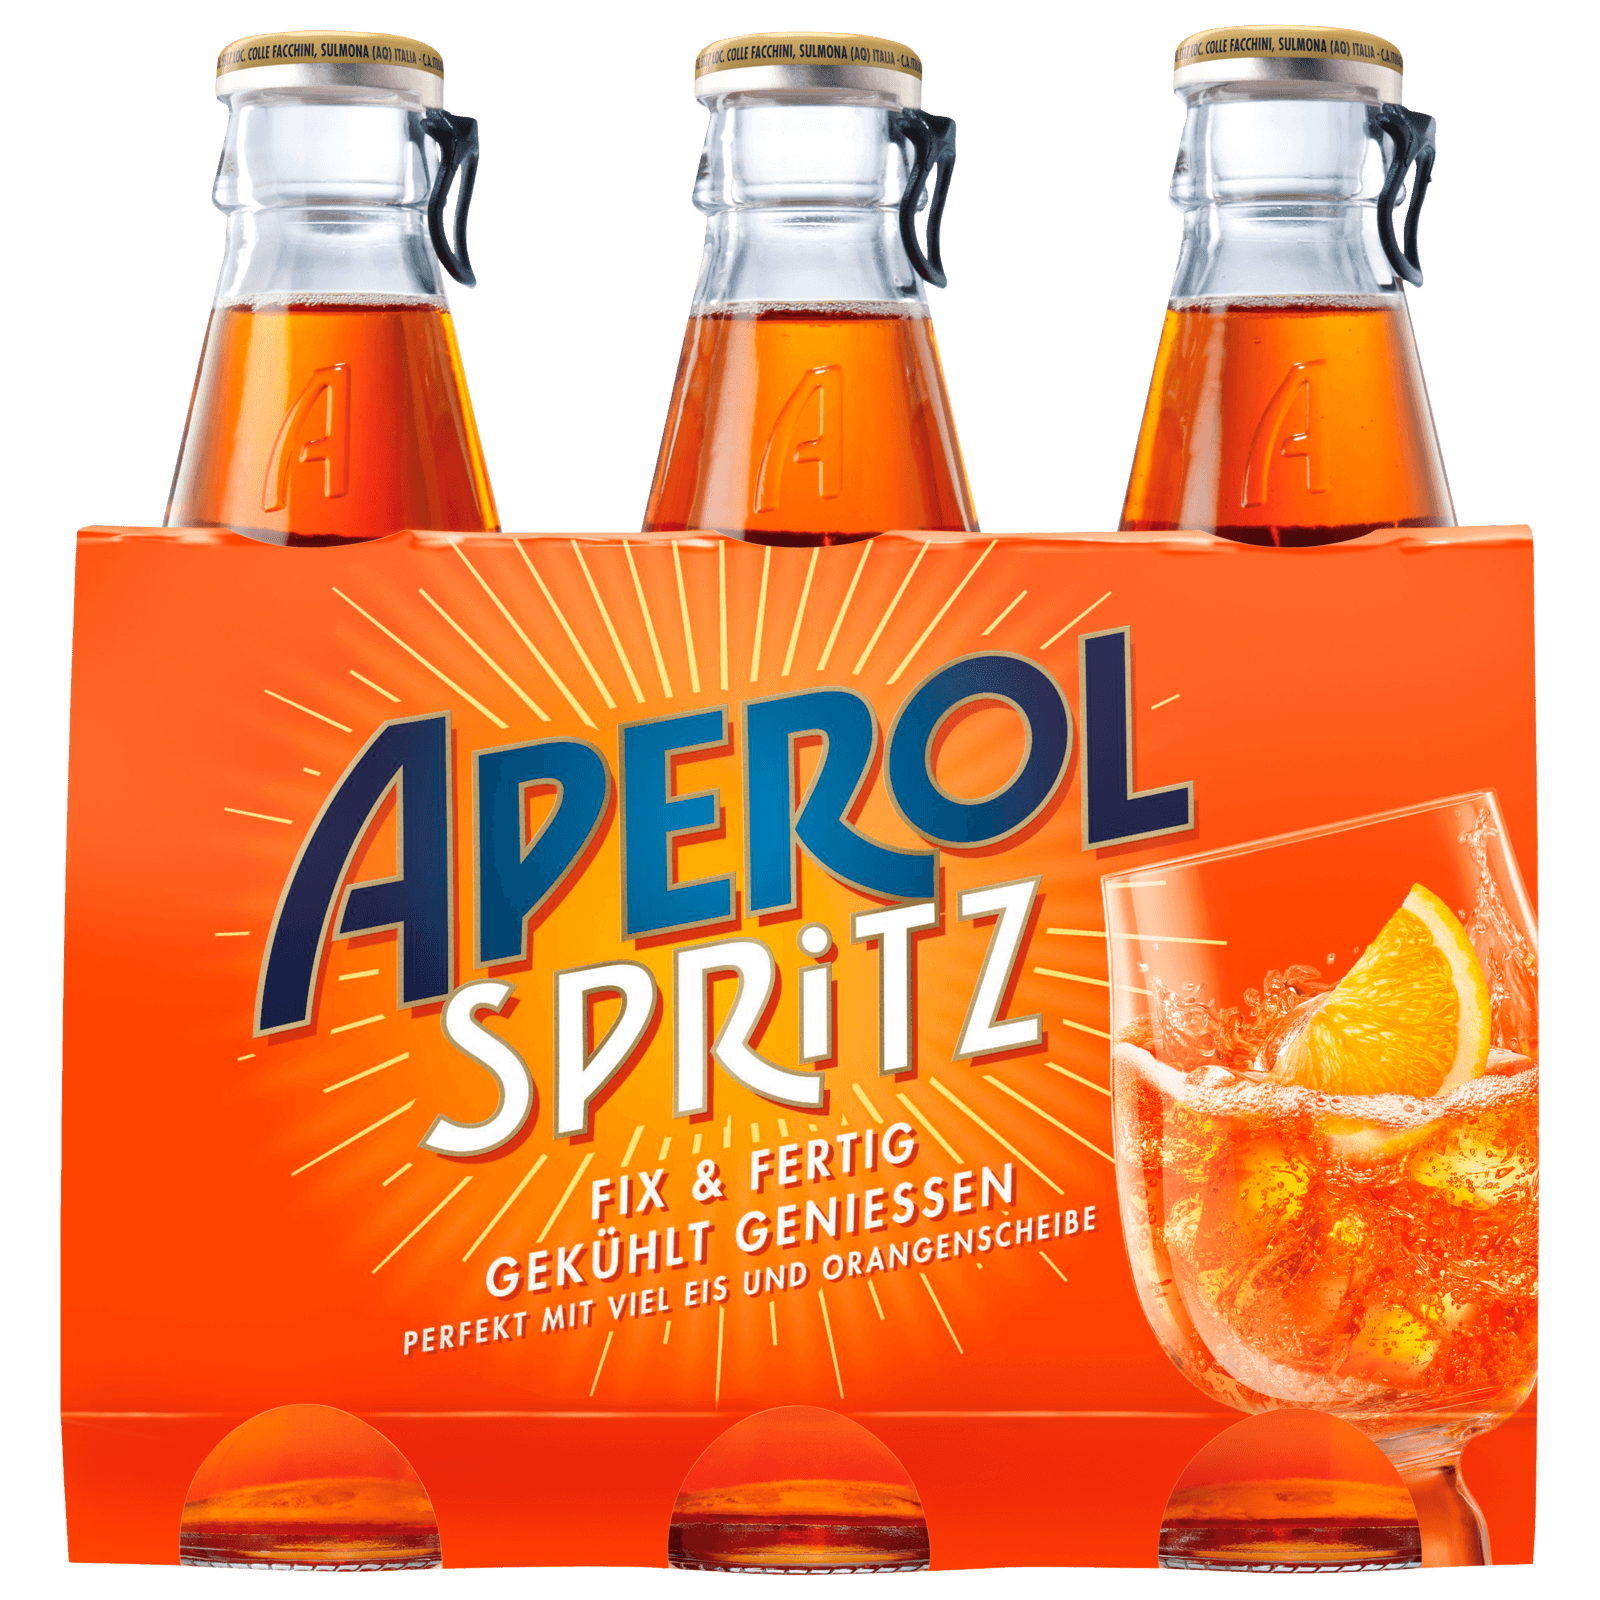 bestellen! Aperol Spritz REWE gemixt bei 3x175ml Perfekt online